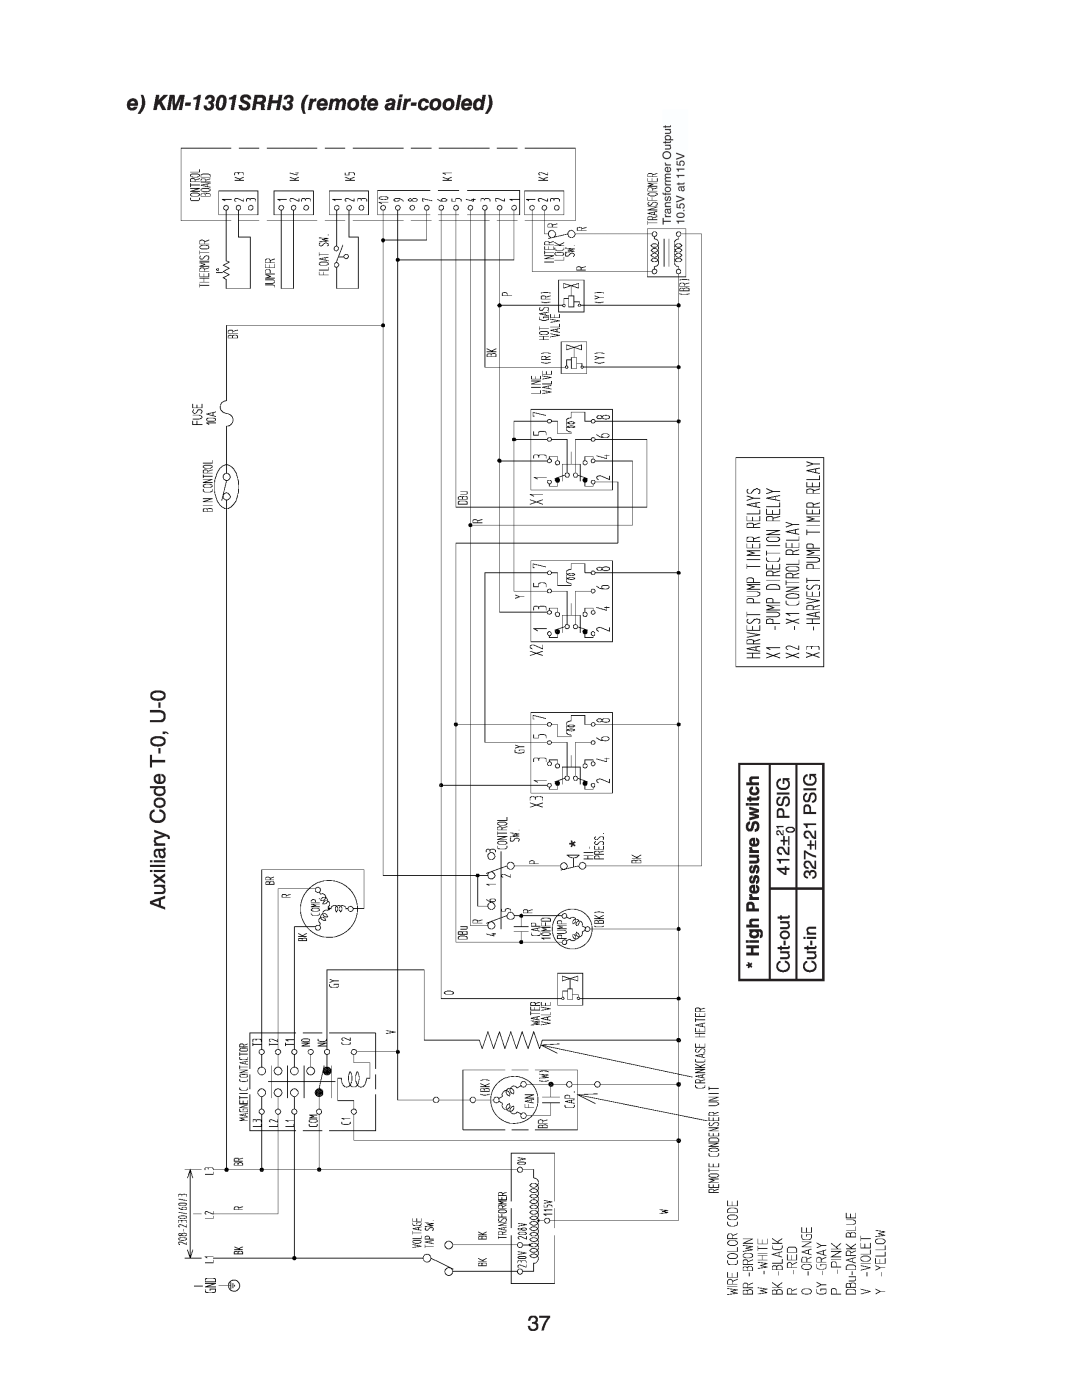 Hoshizaki KM-1301SRH/3, KM-1301SAH/3 Auxiliary Code T-0, U-0, KM-1301SRH3remote air-cooled, Transformer Output, 10.5V at 